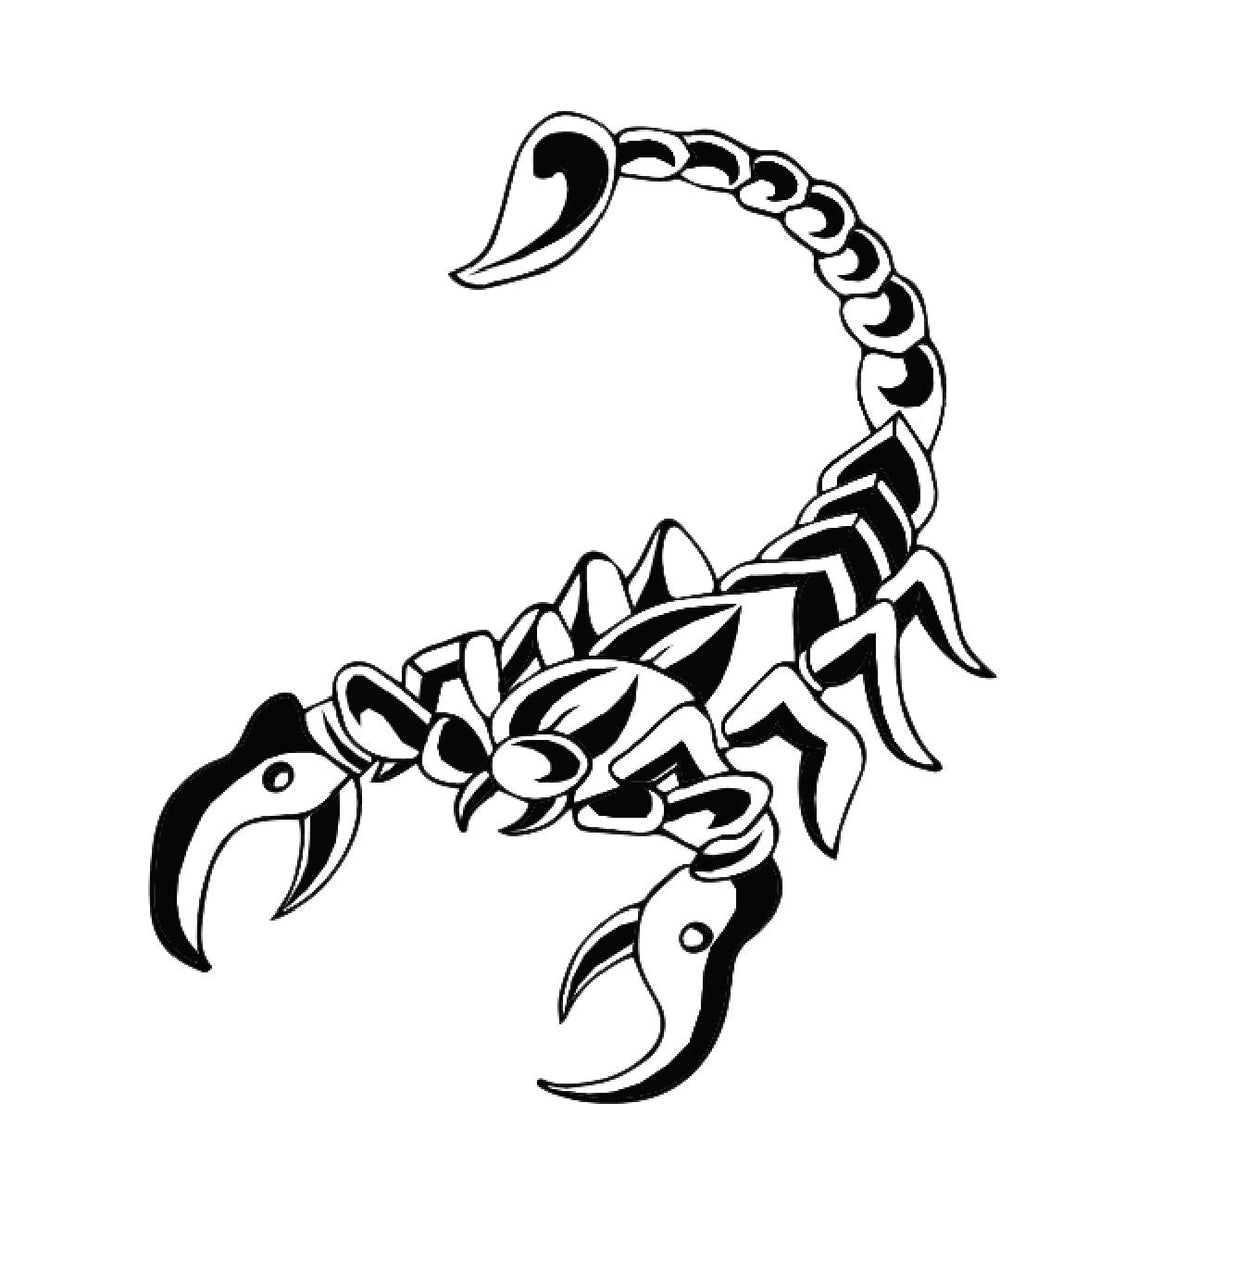 Black Scorpion Tattoo | Unique temporary tattoo design, set of 3 prints